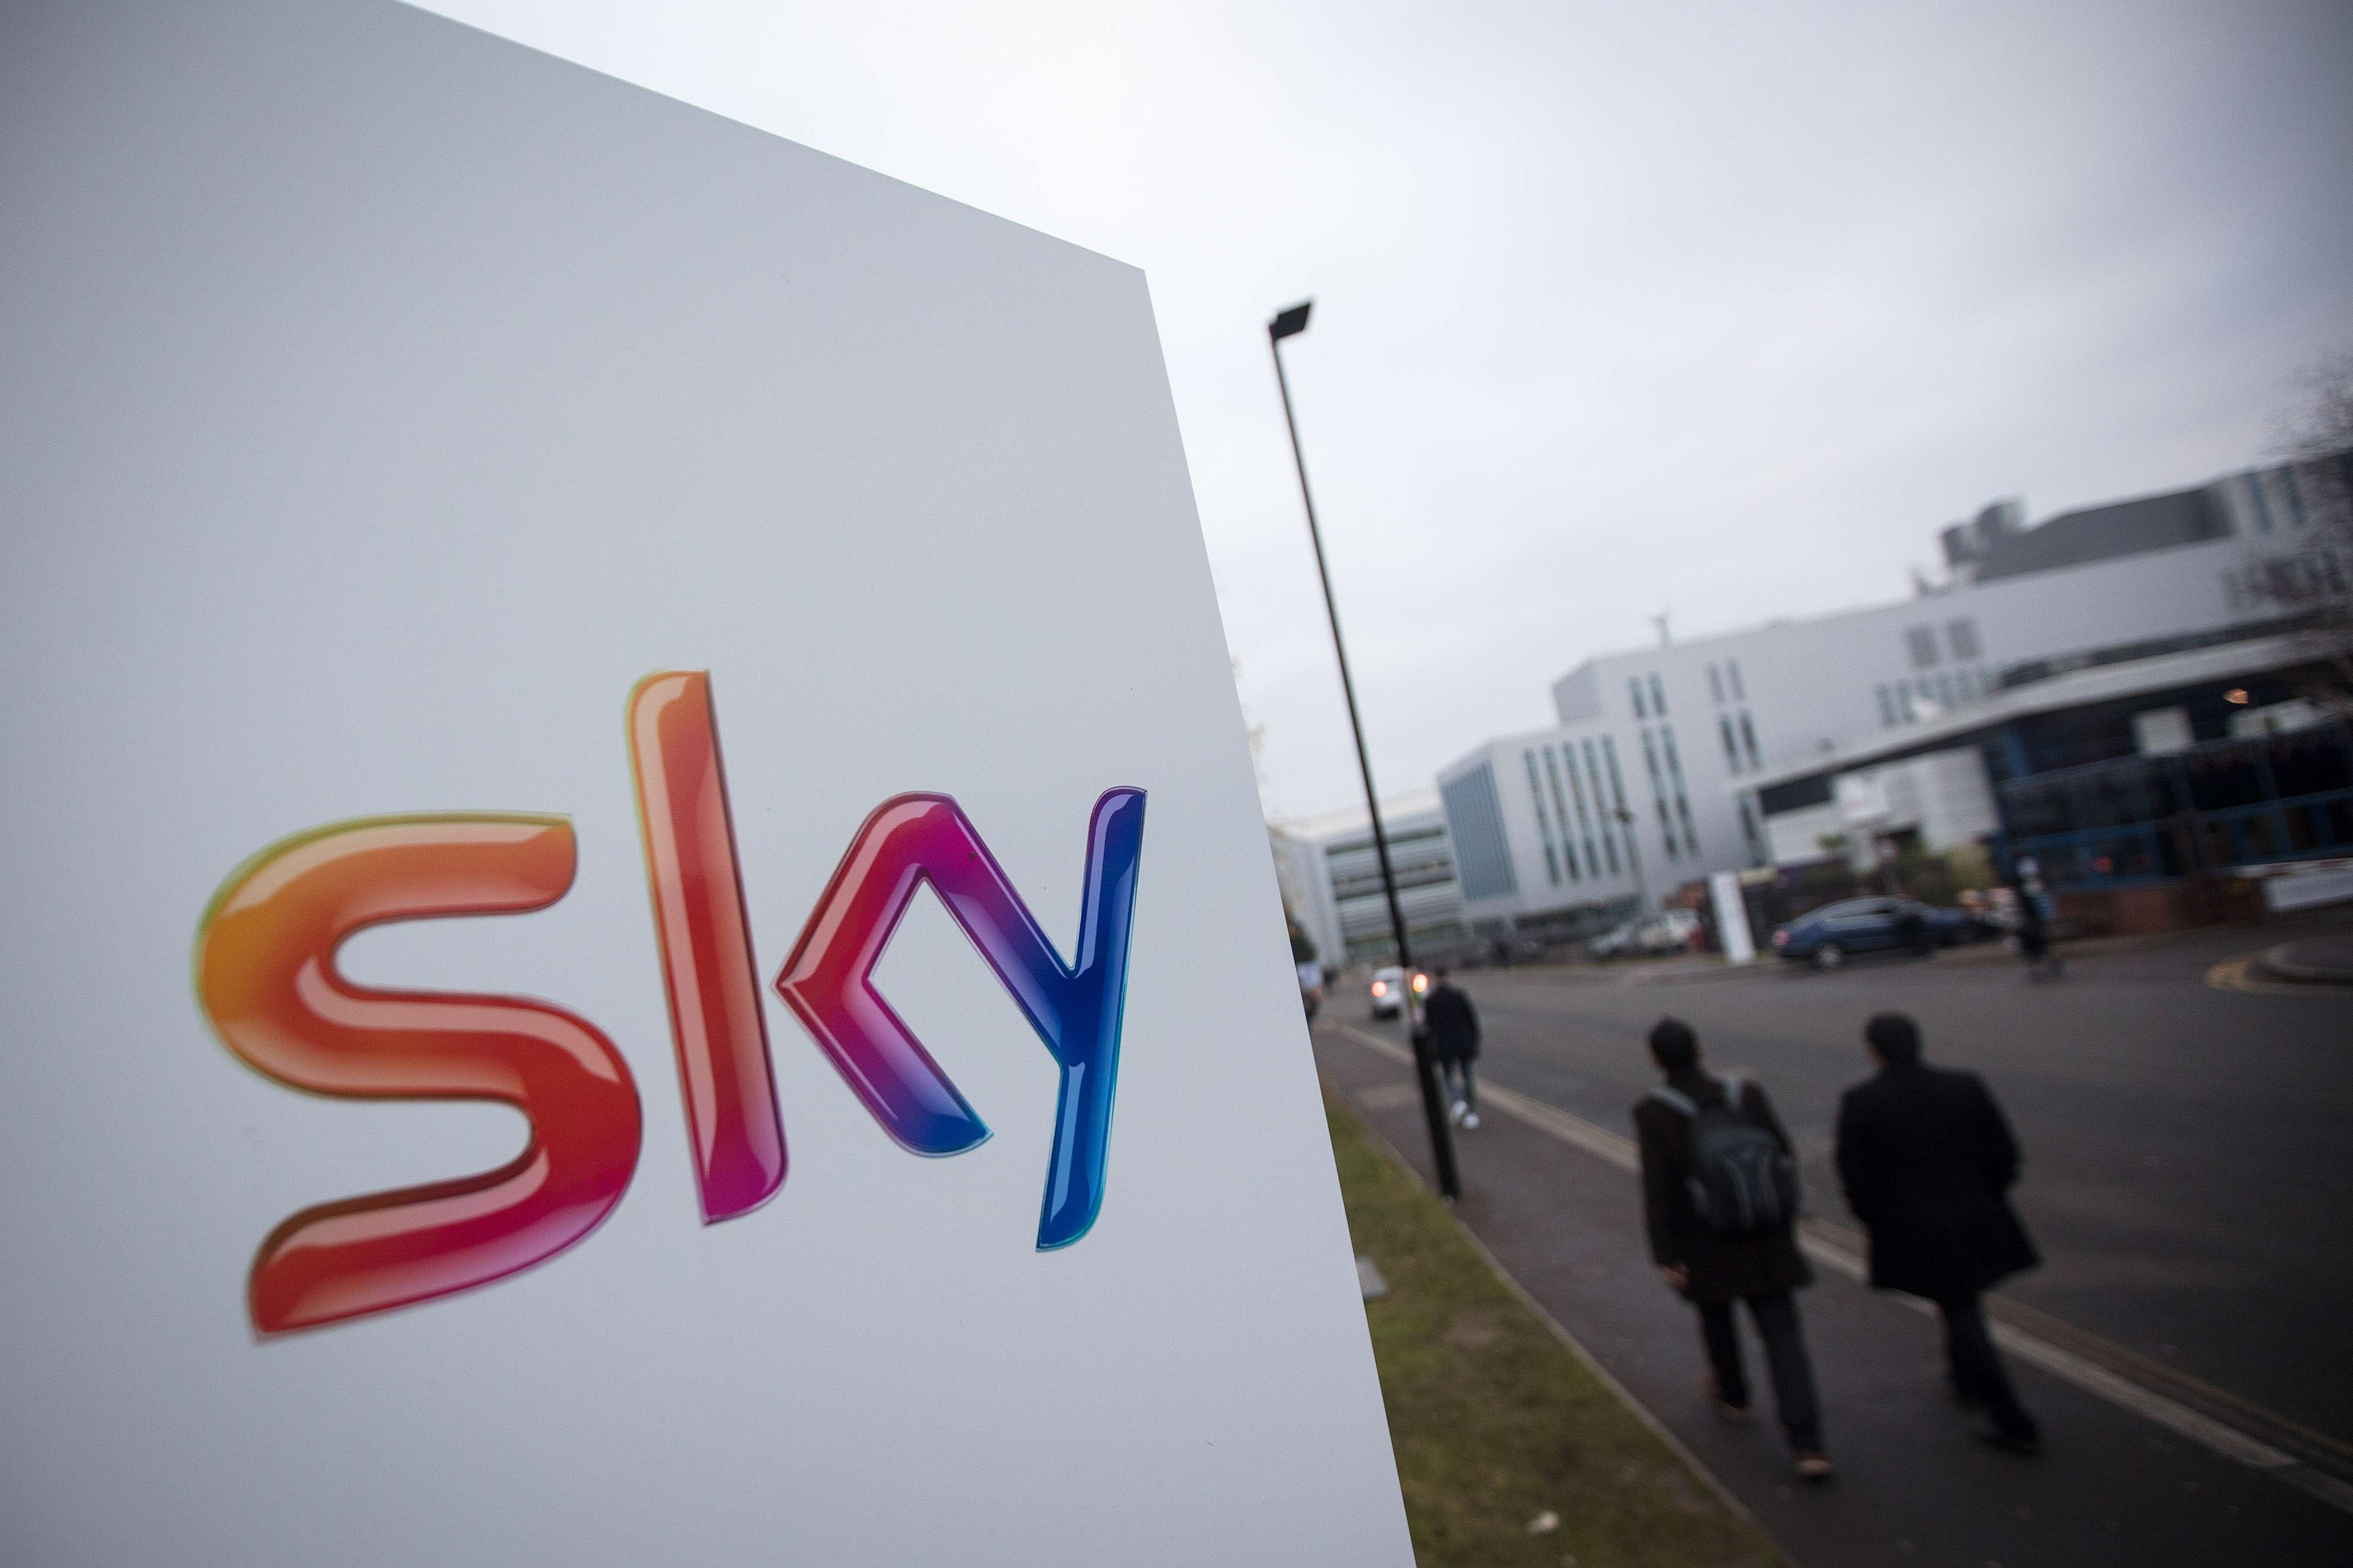 Sky’s headquarters in Isleworth, London. Photo: Bloomberg